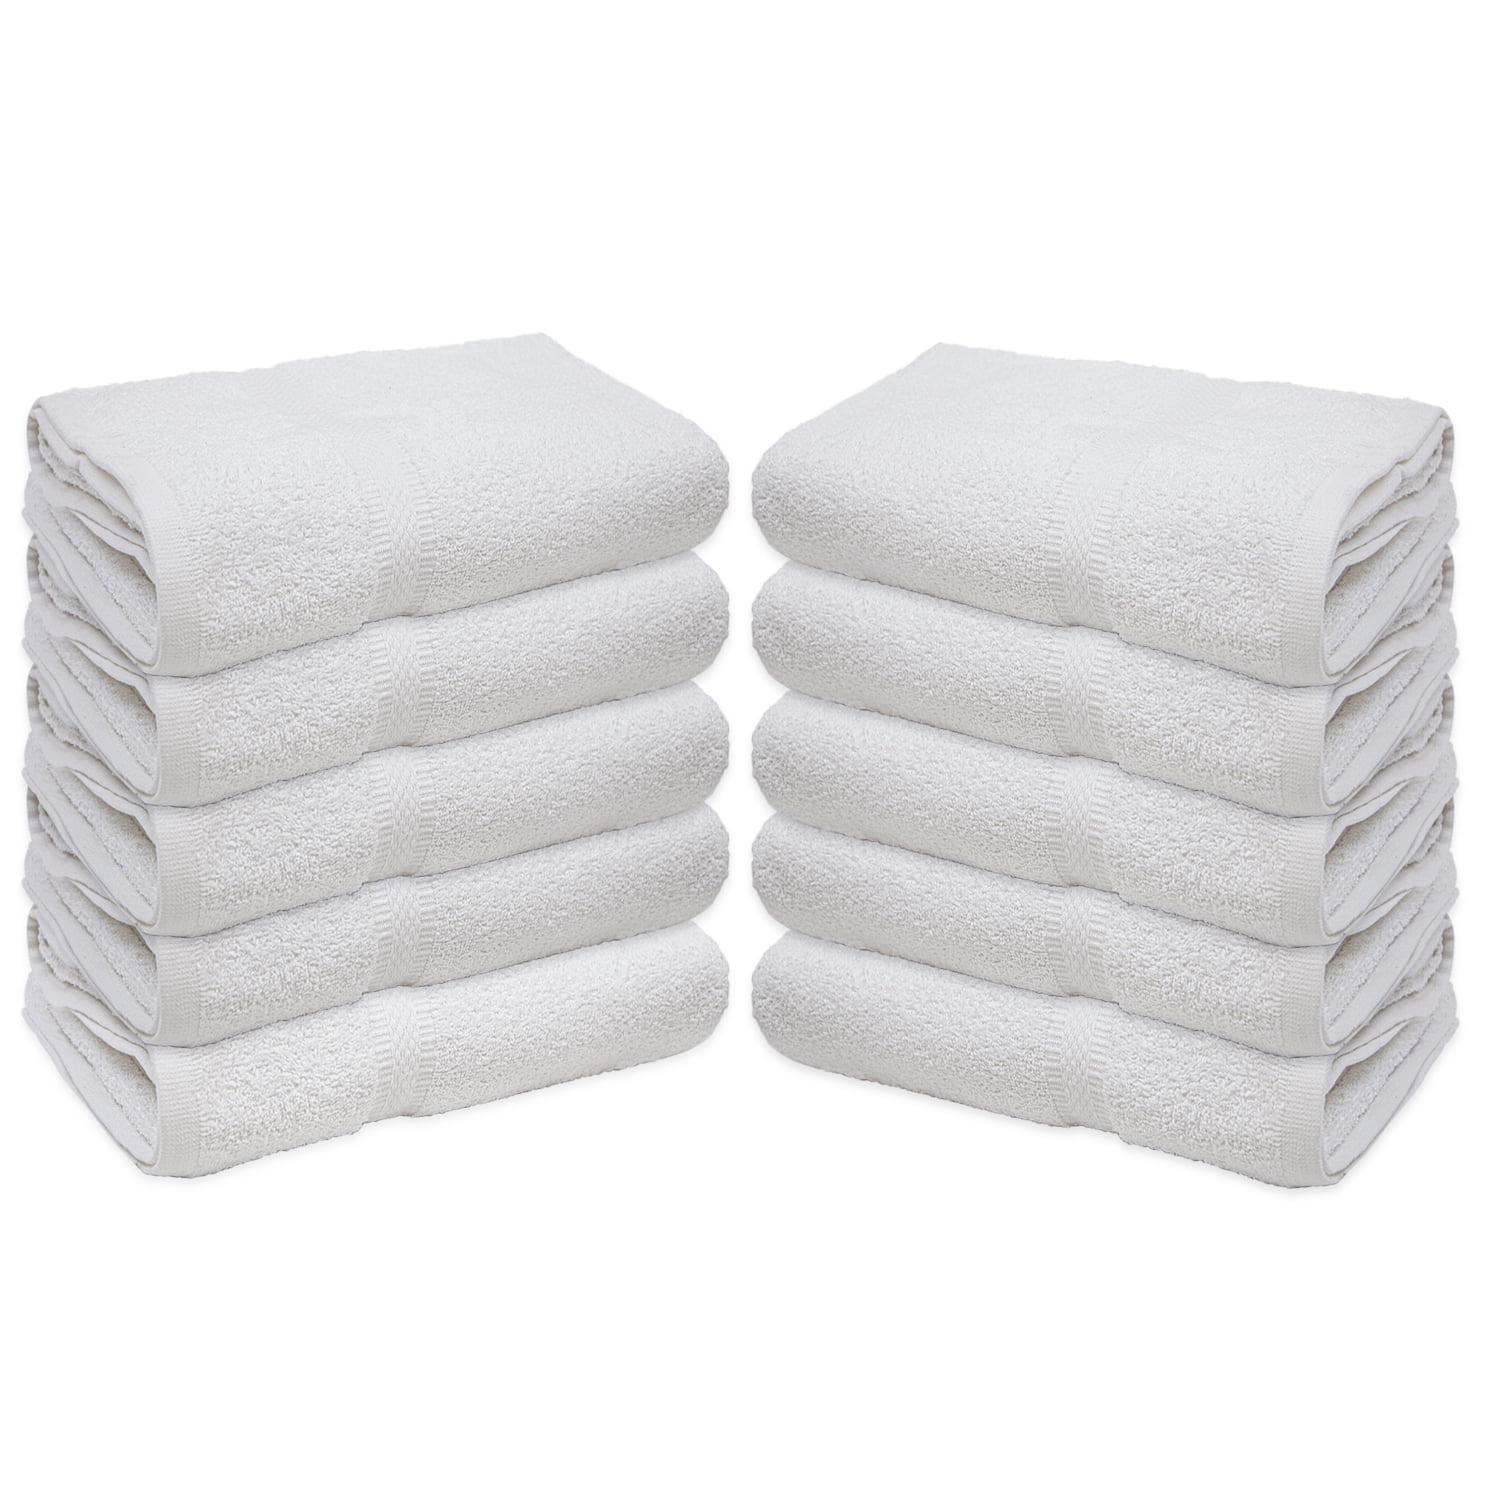 Details about   12 Pack of Admiral Bath Towels 24 x 50 White Bulk Bathroom Cotton Towels 